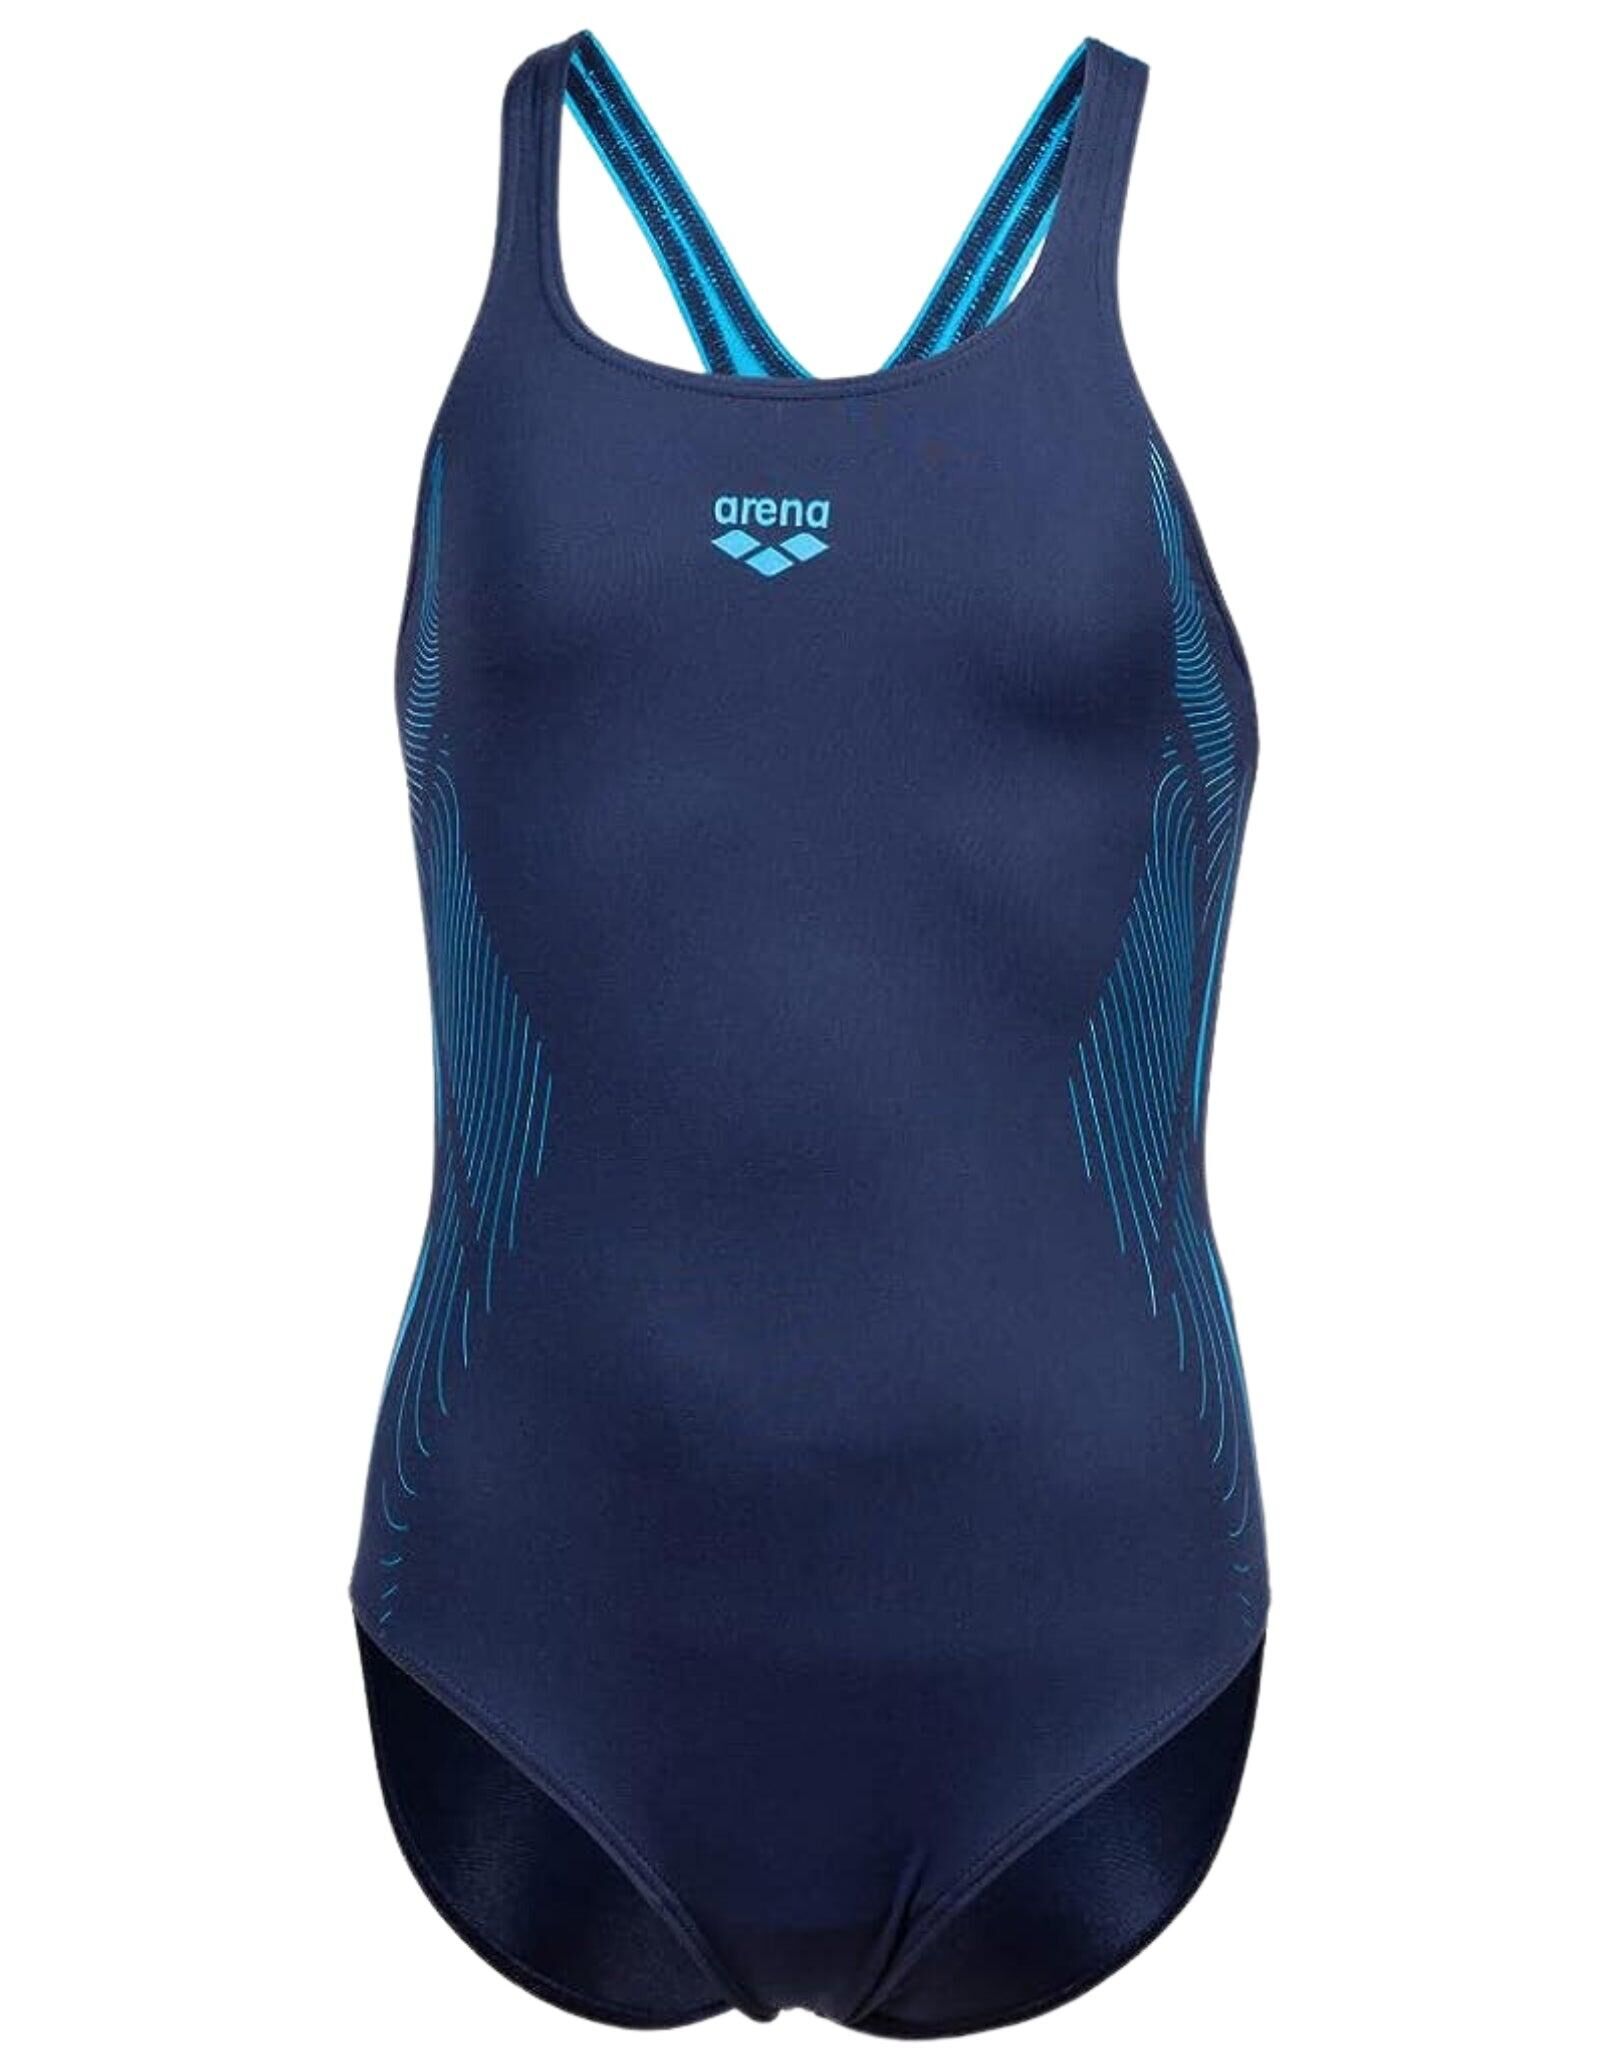 Arena Girls's Solid PRO Swim Suit, Blue, Age 8-9 